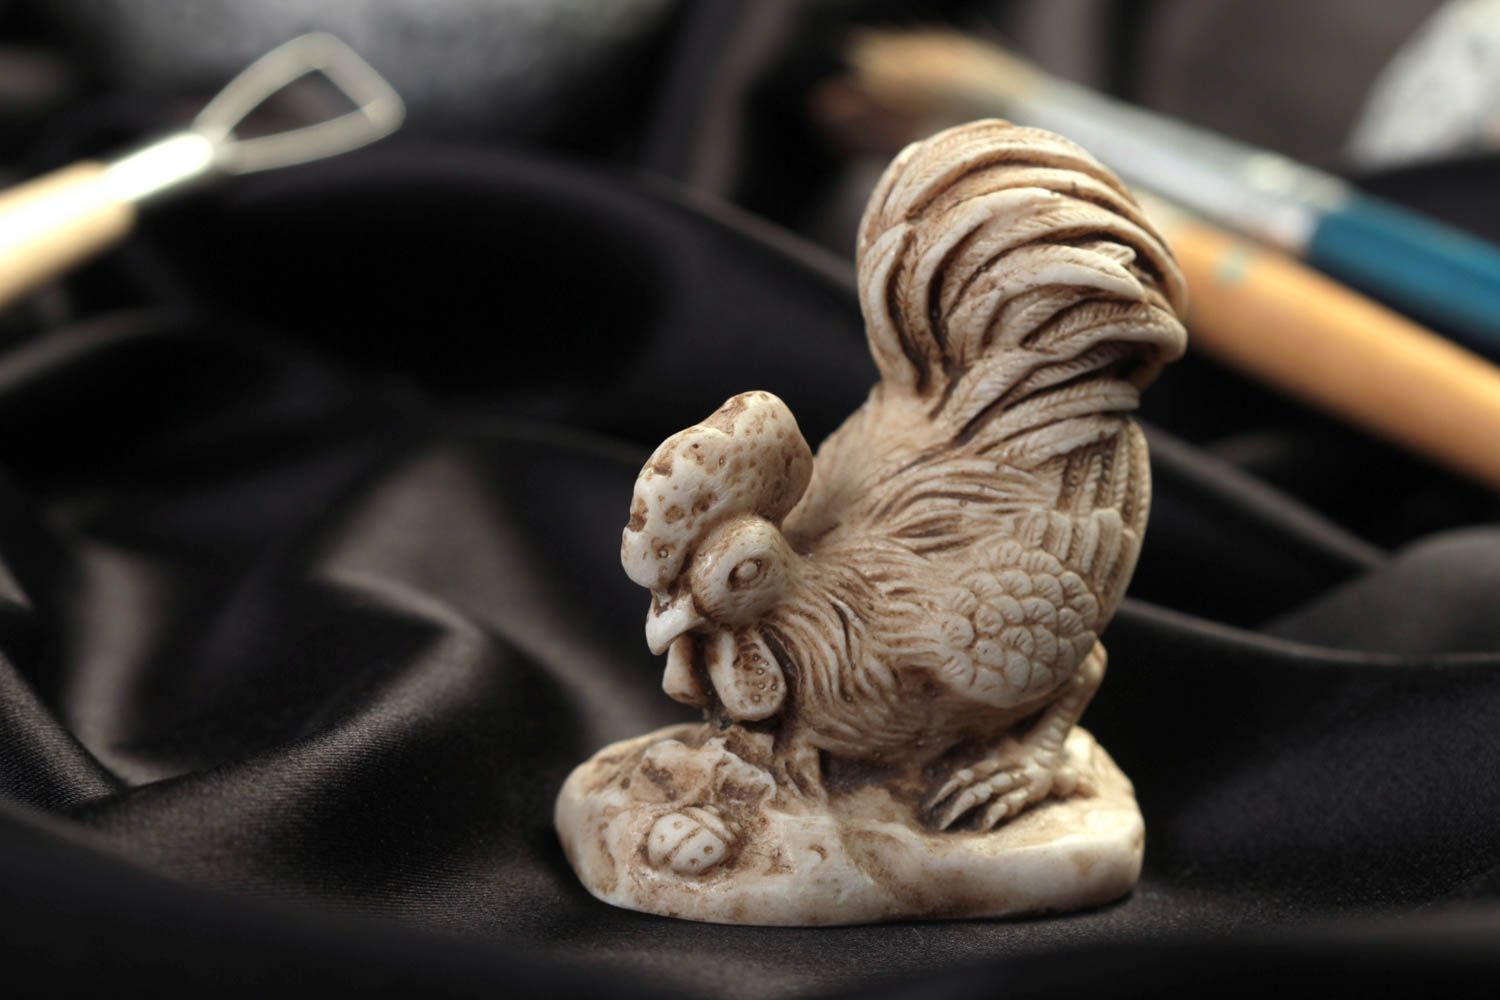 Figura en miniatura hecha a mano elemento decorativo souvenir original foto 1